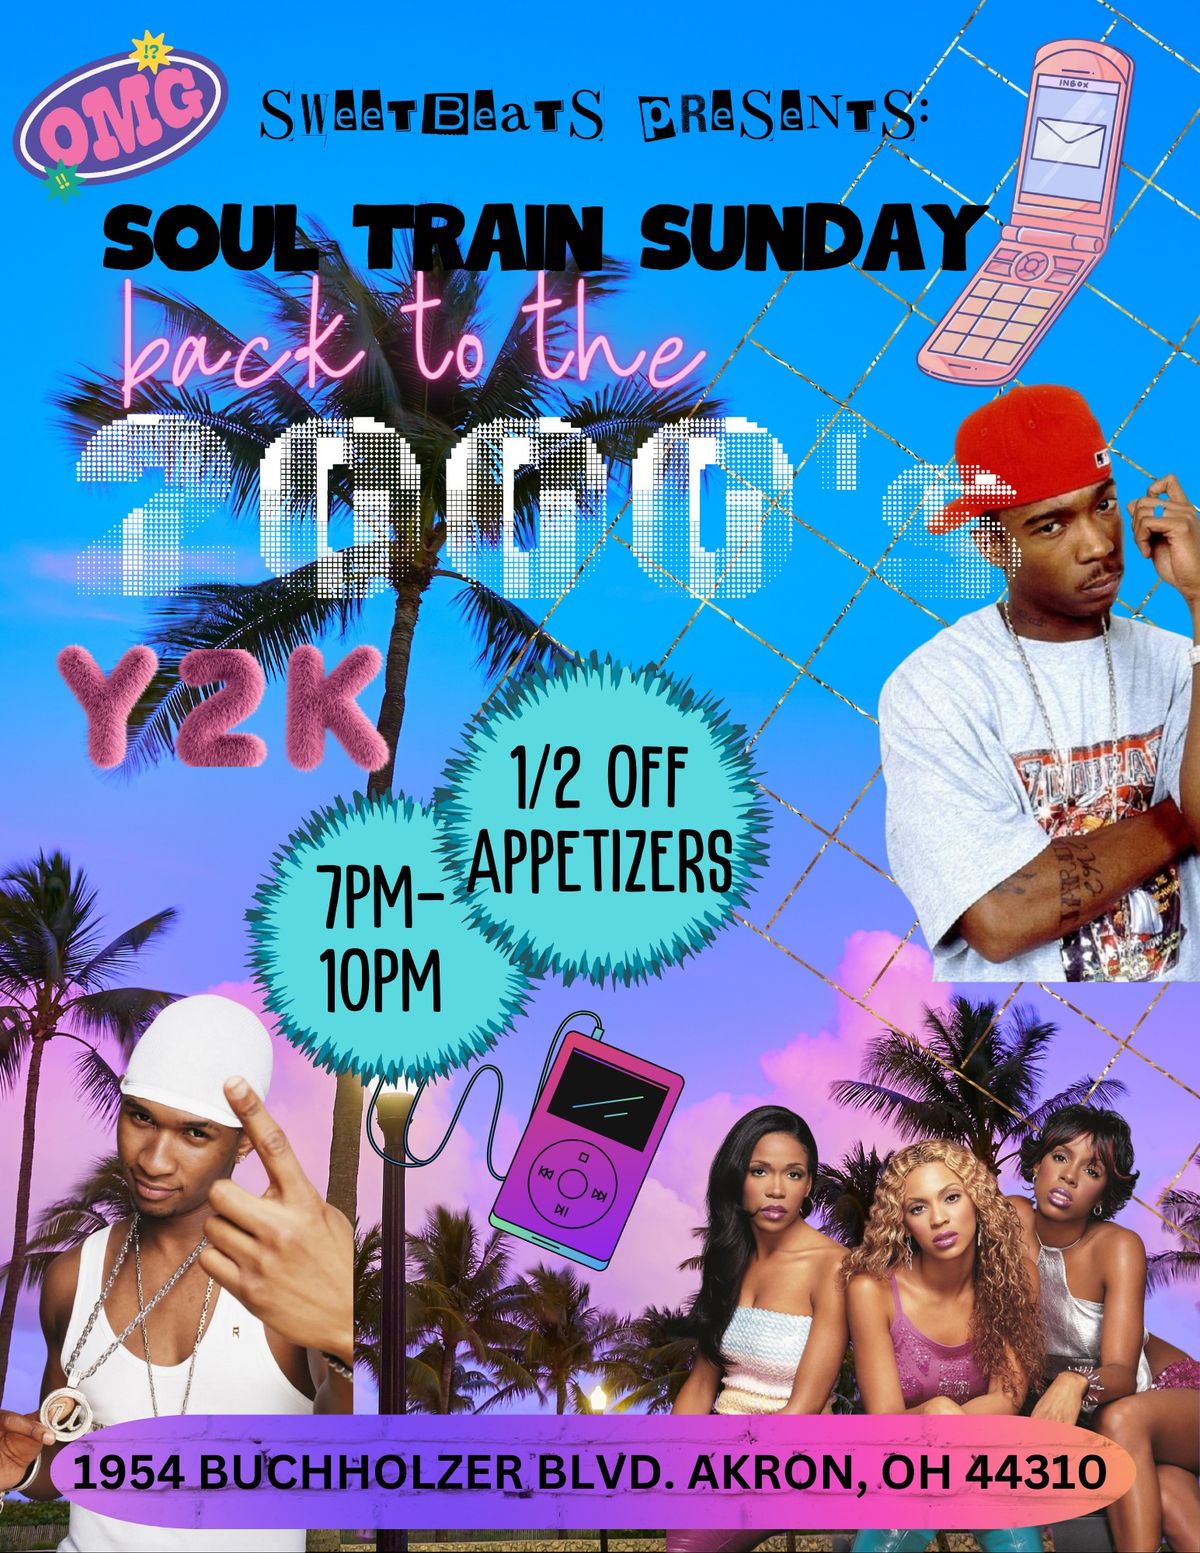 Sweetbeats Presents: Soul Train 2000s Era